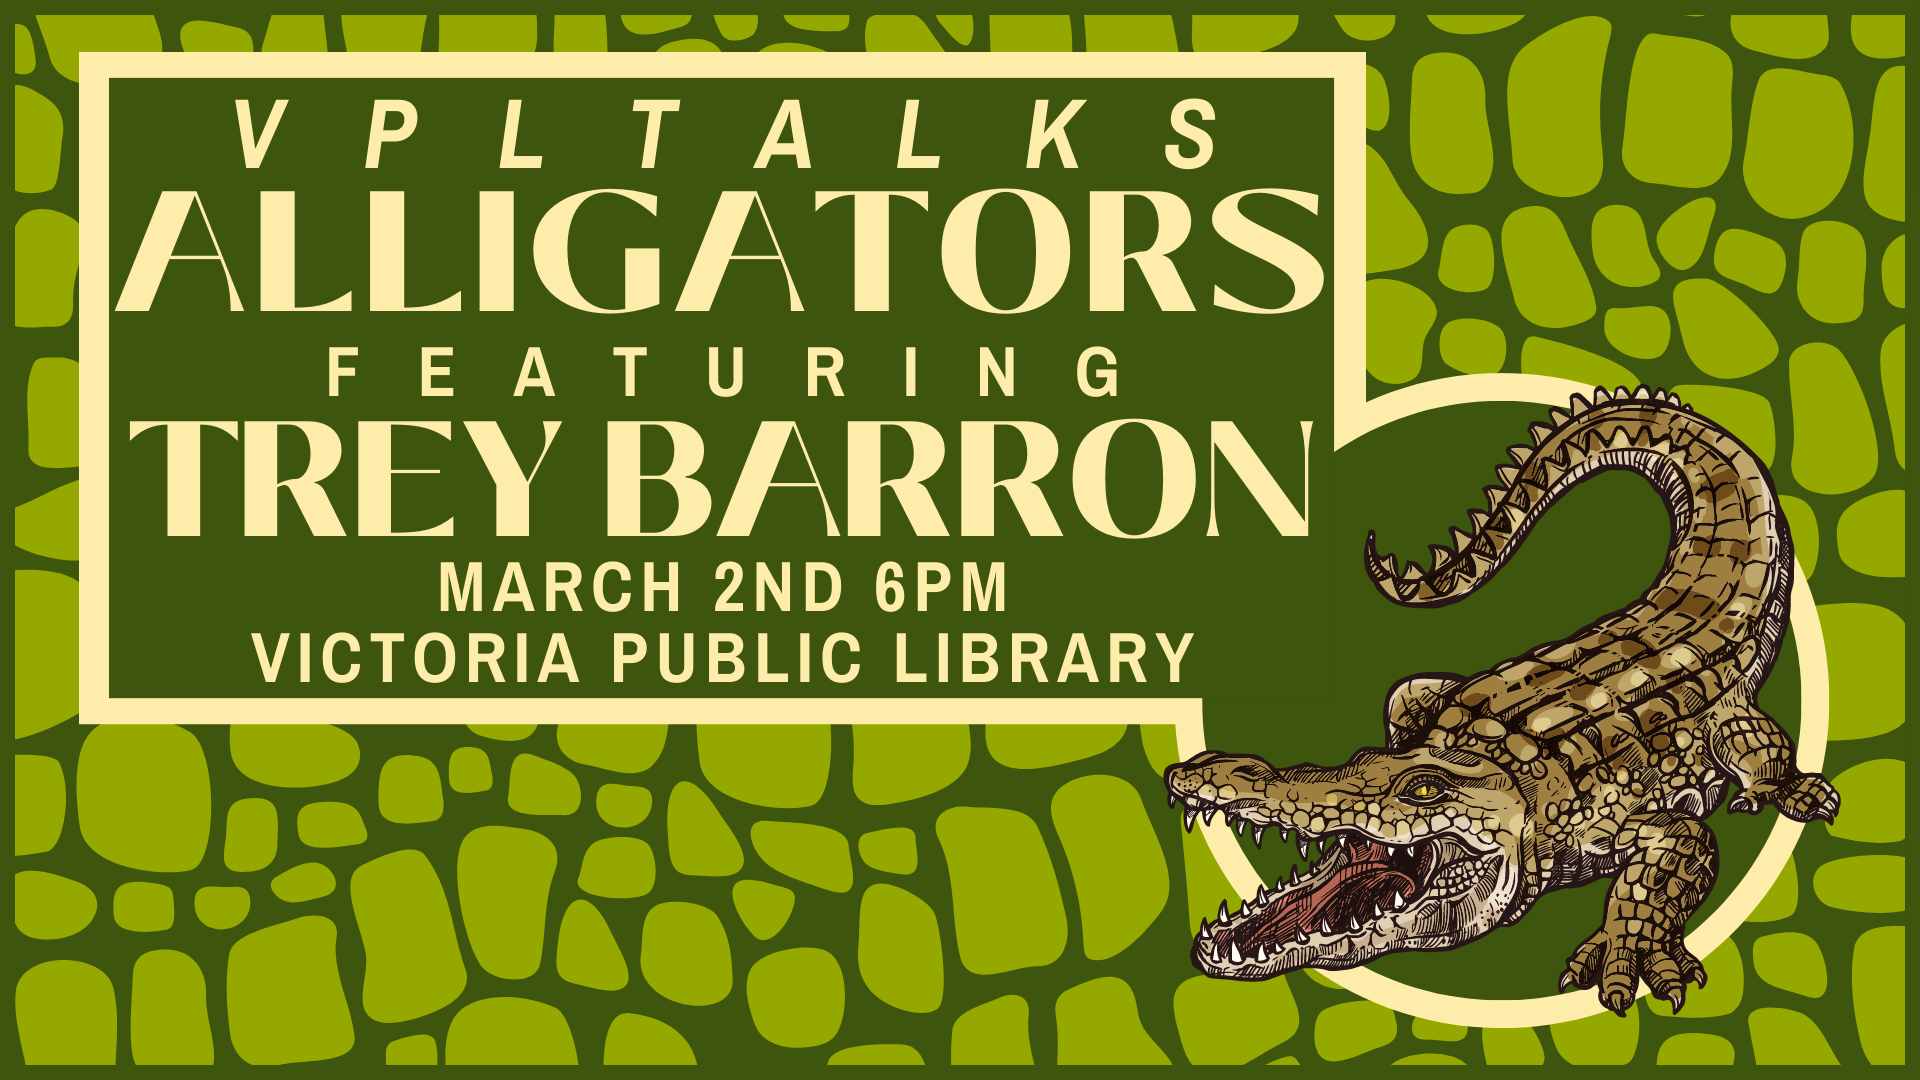 March 2nd VPL Talks with Trey Barron 6PM, Regional wildlife